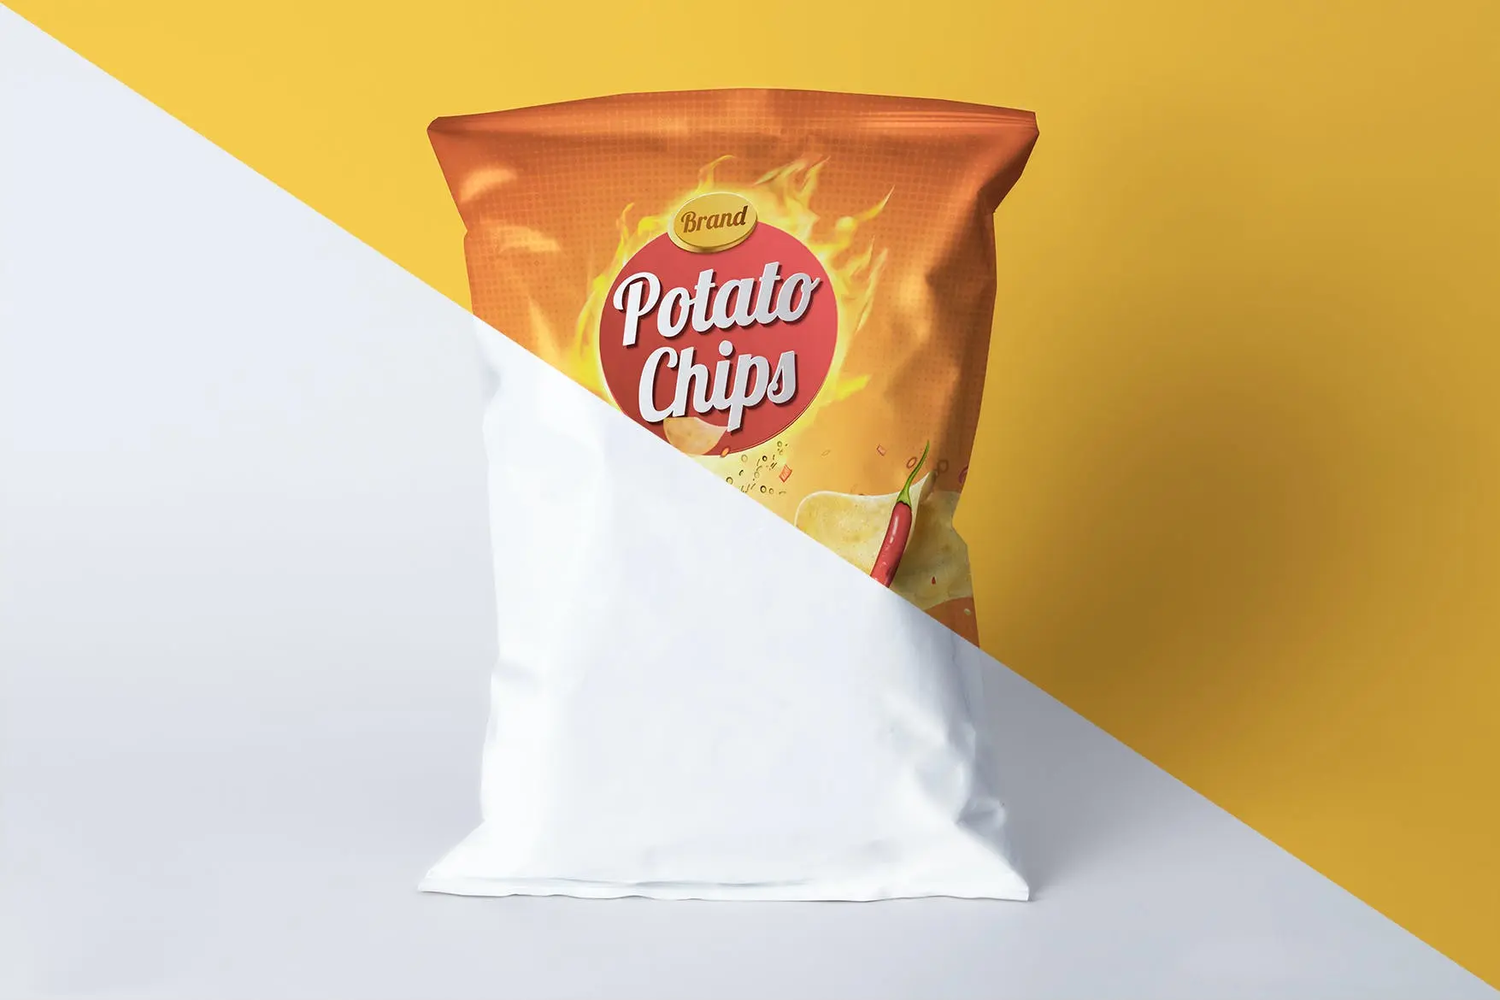 22 薯片膨化食品包装设计样机 Bag Of Chips Mockup